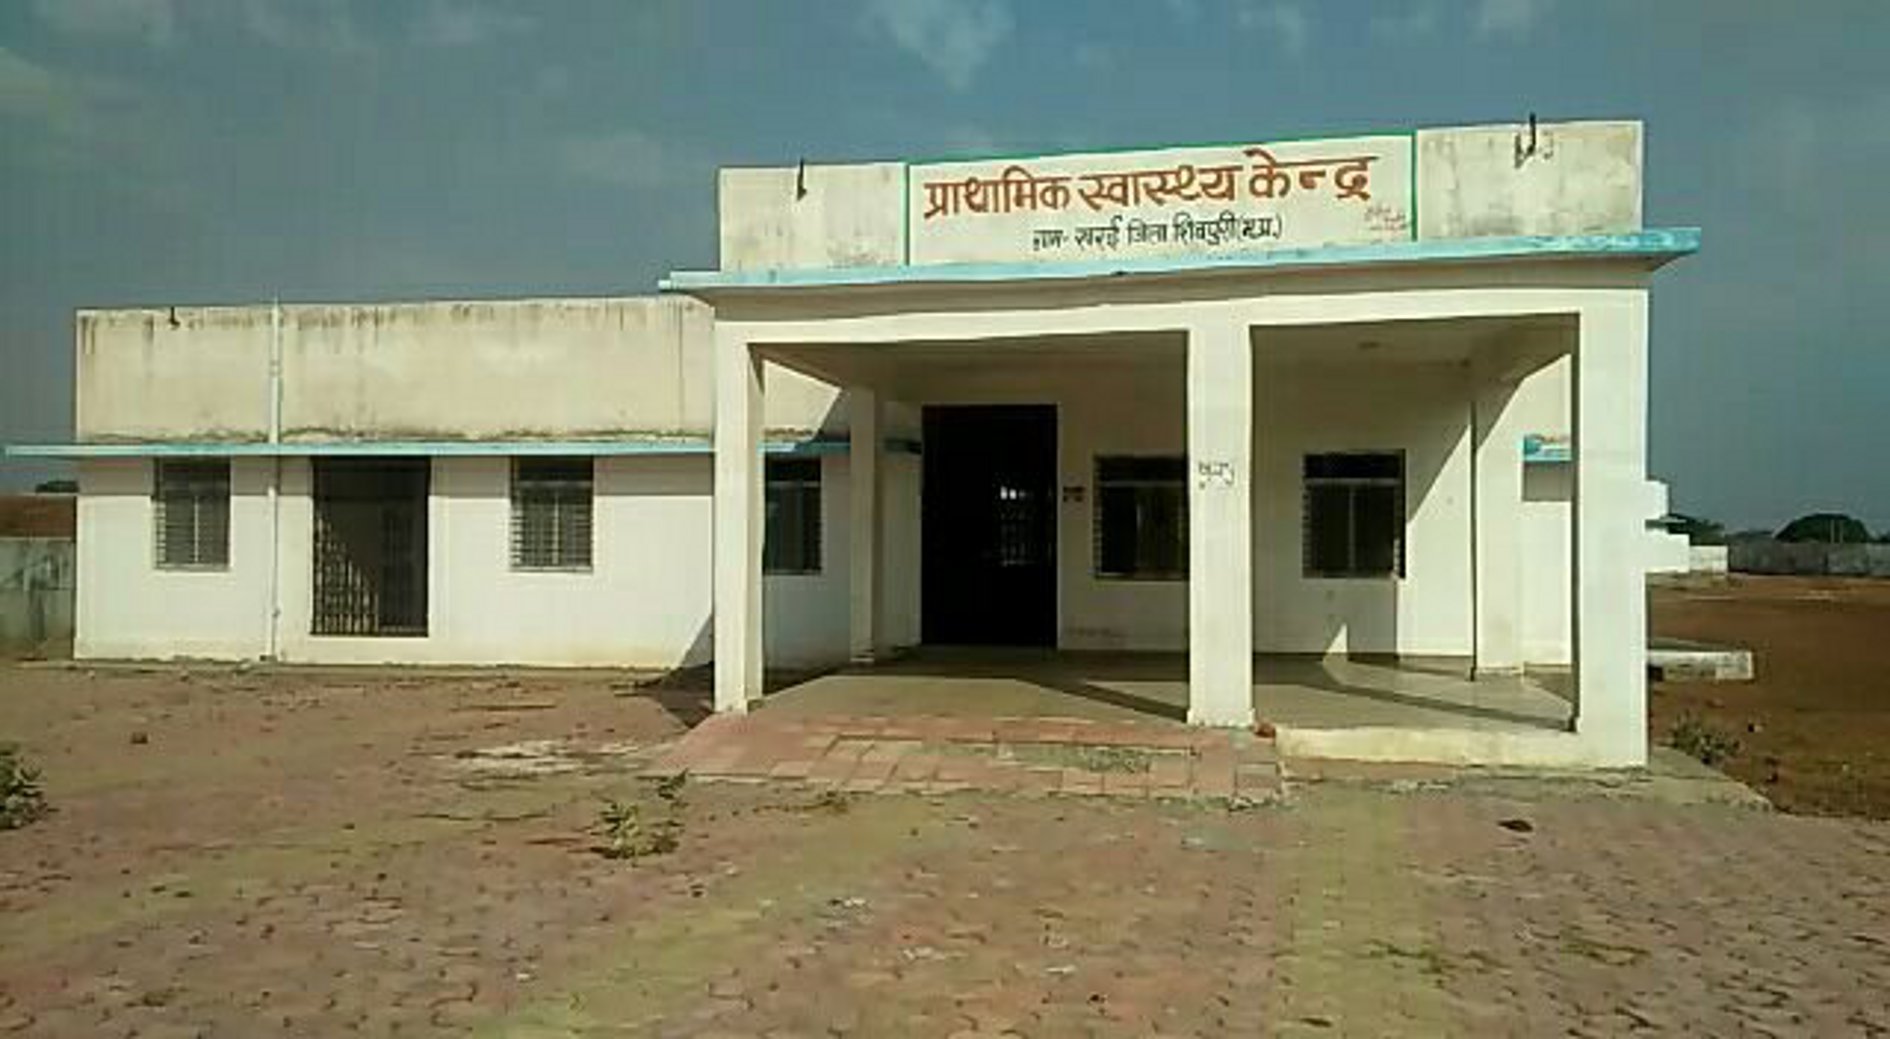 Primary Health Center, Kolaras, Cure, Patients, Hospital, shivpuri, shivpuri news, , shivpuri news in mp